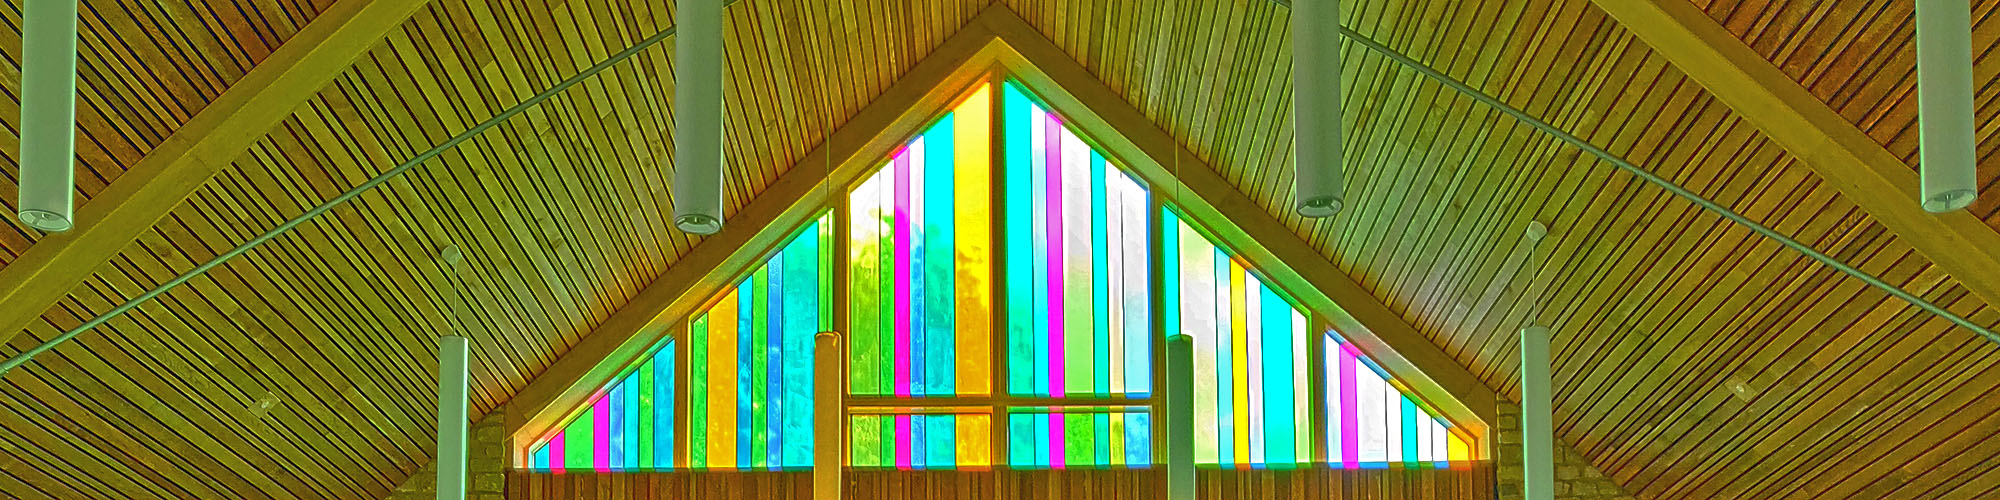 chapel-stain-glass-window1-2000x500